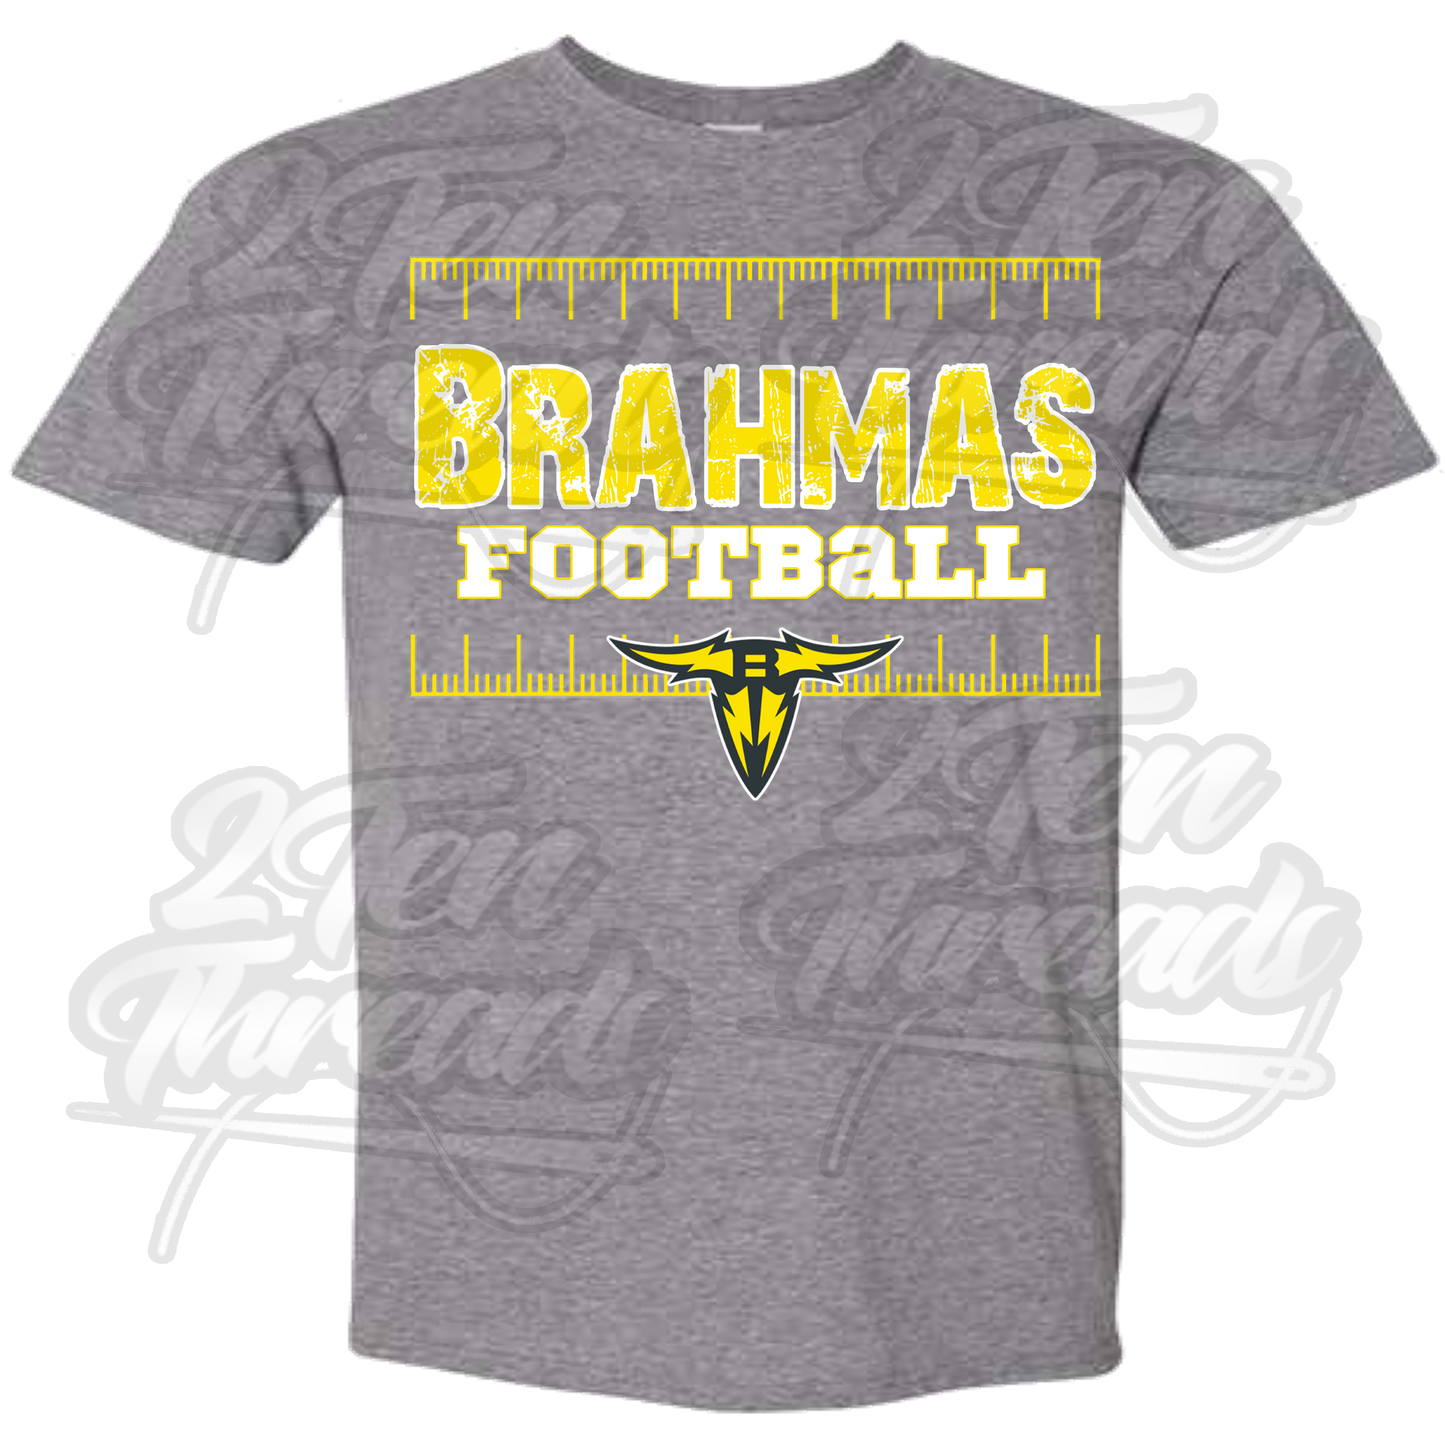 Brahmas Field shirt